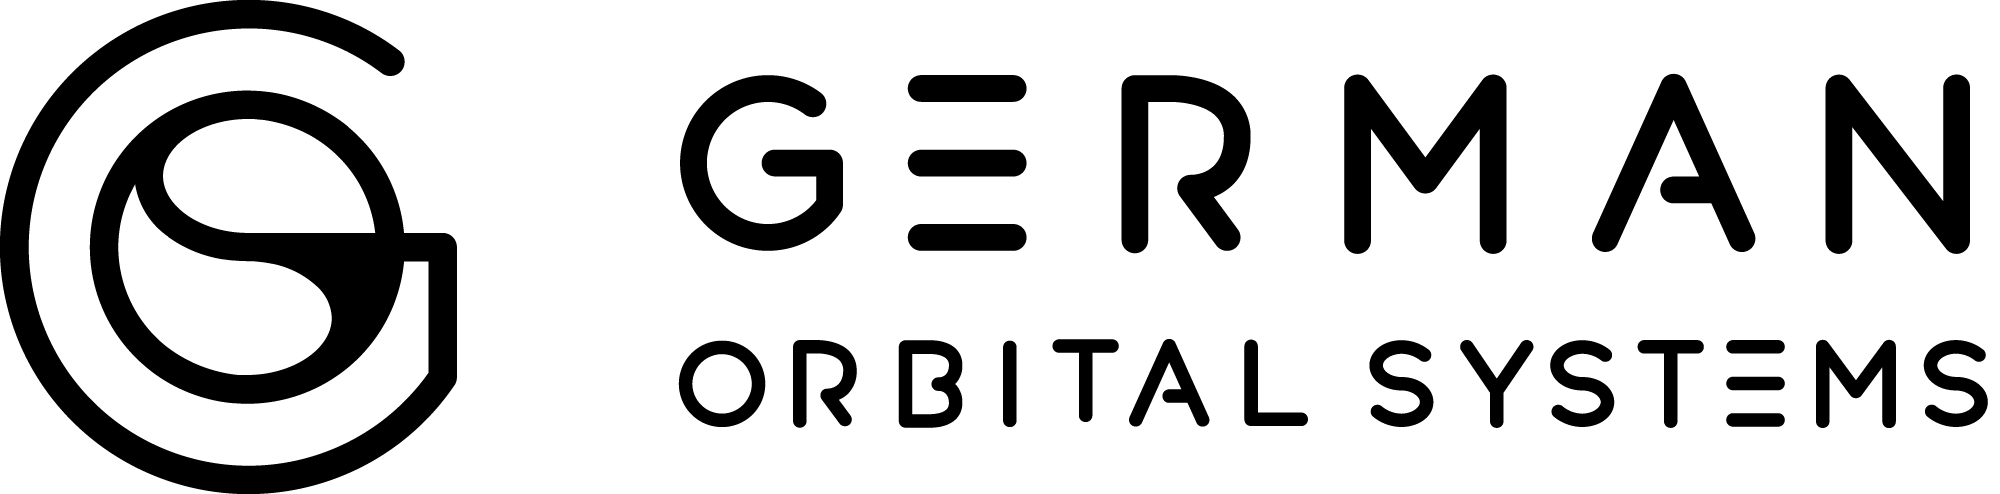 German Orbital Systems logo